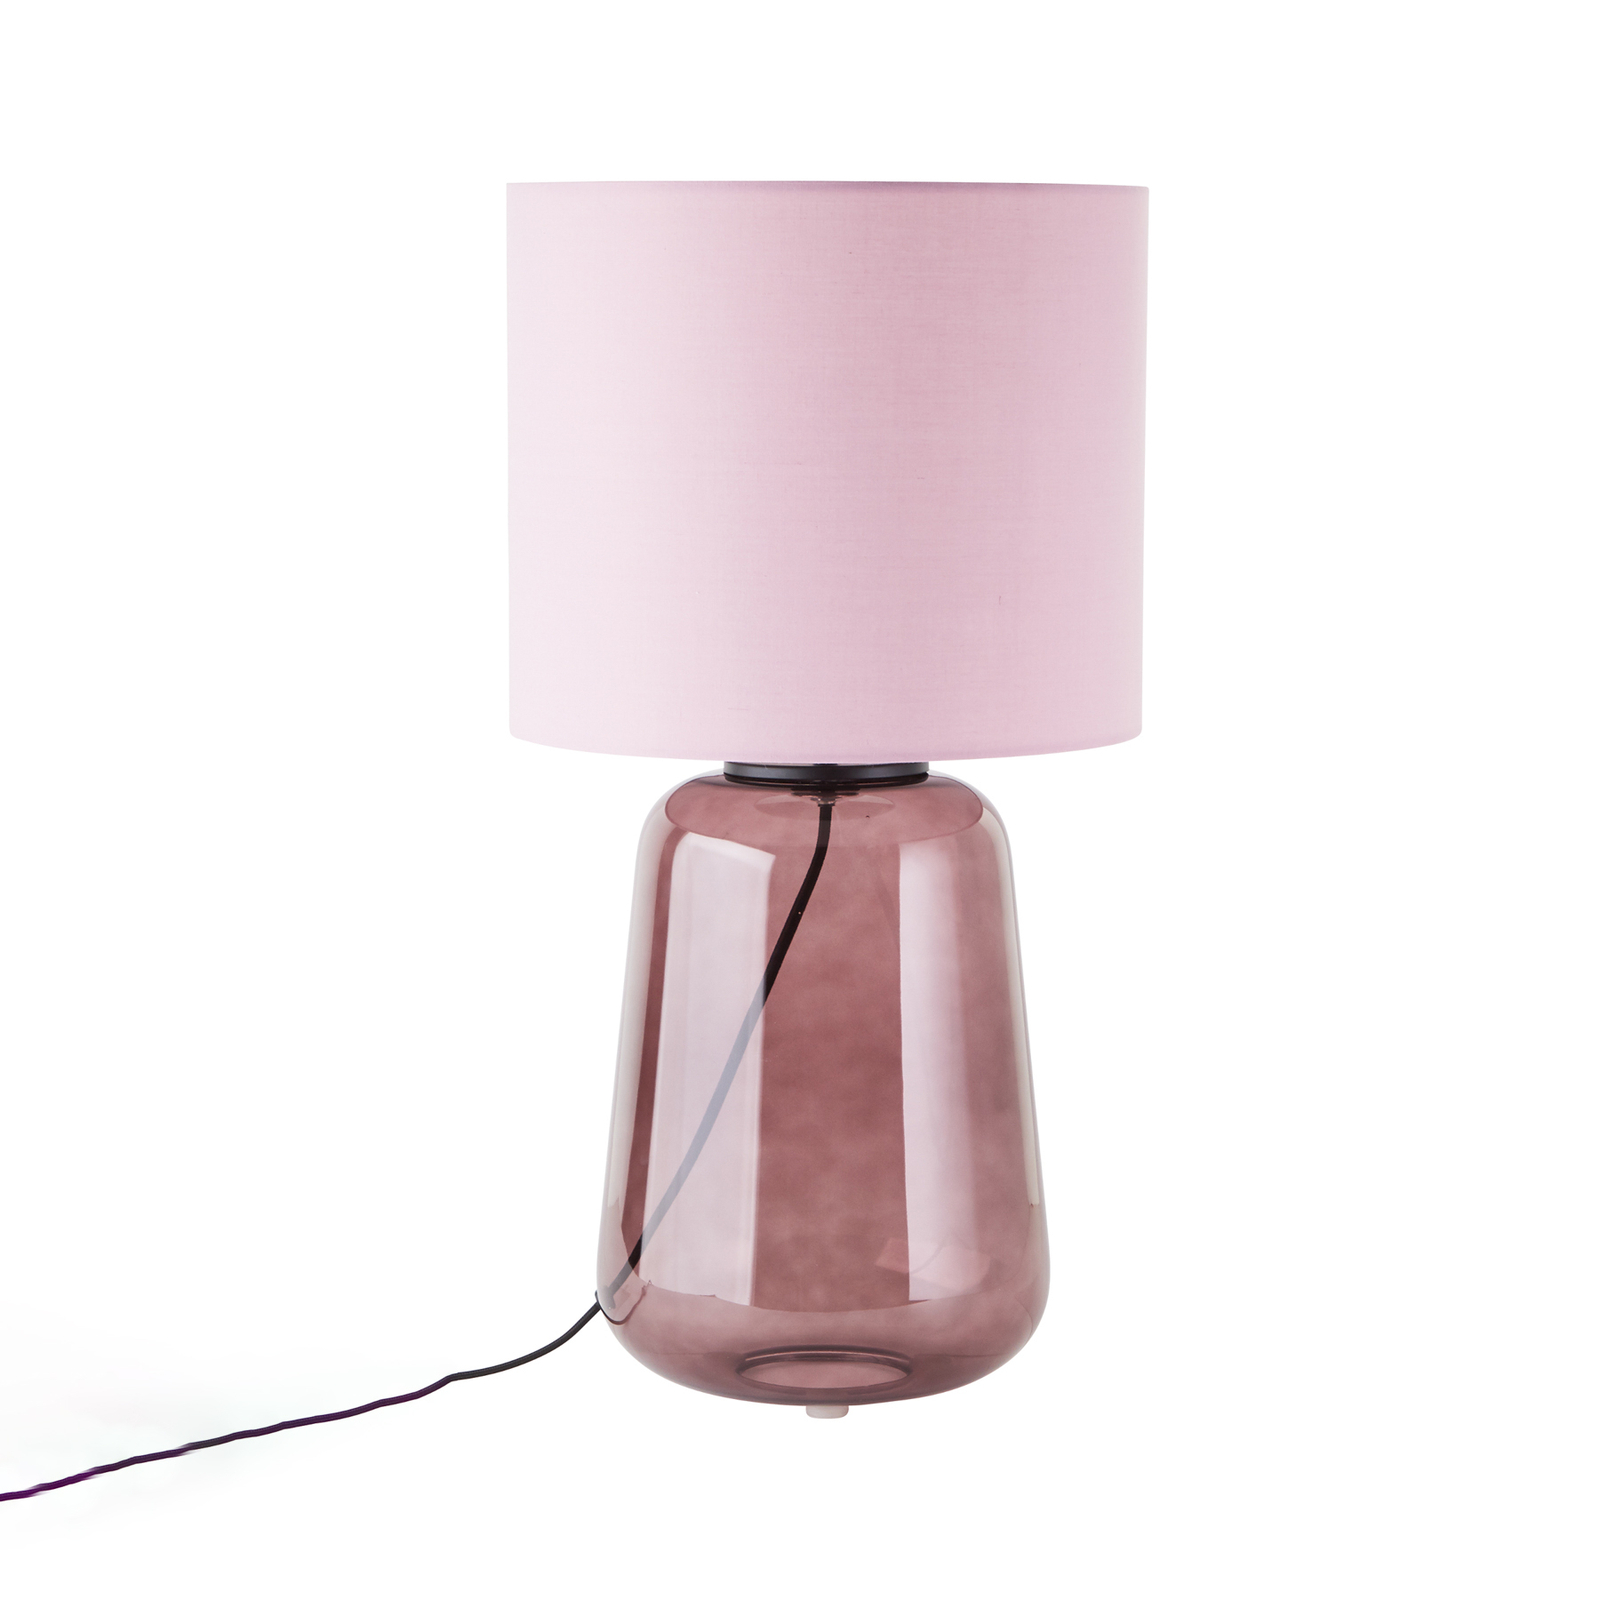 Hydra galda lampa augstums 56,5 cm, violeti violeta/krāsaina